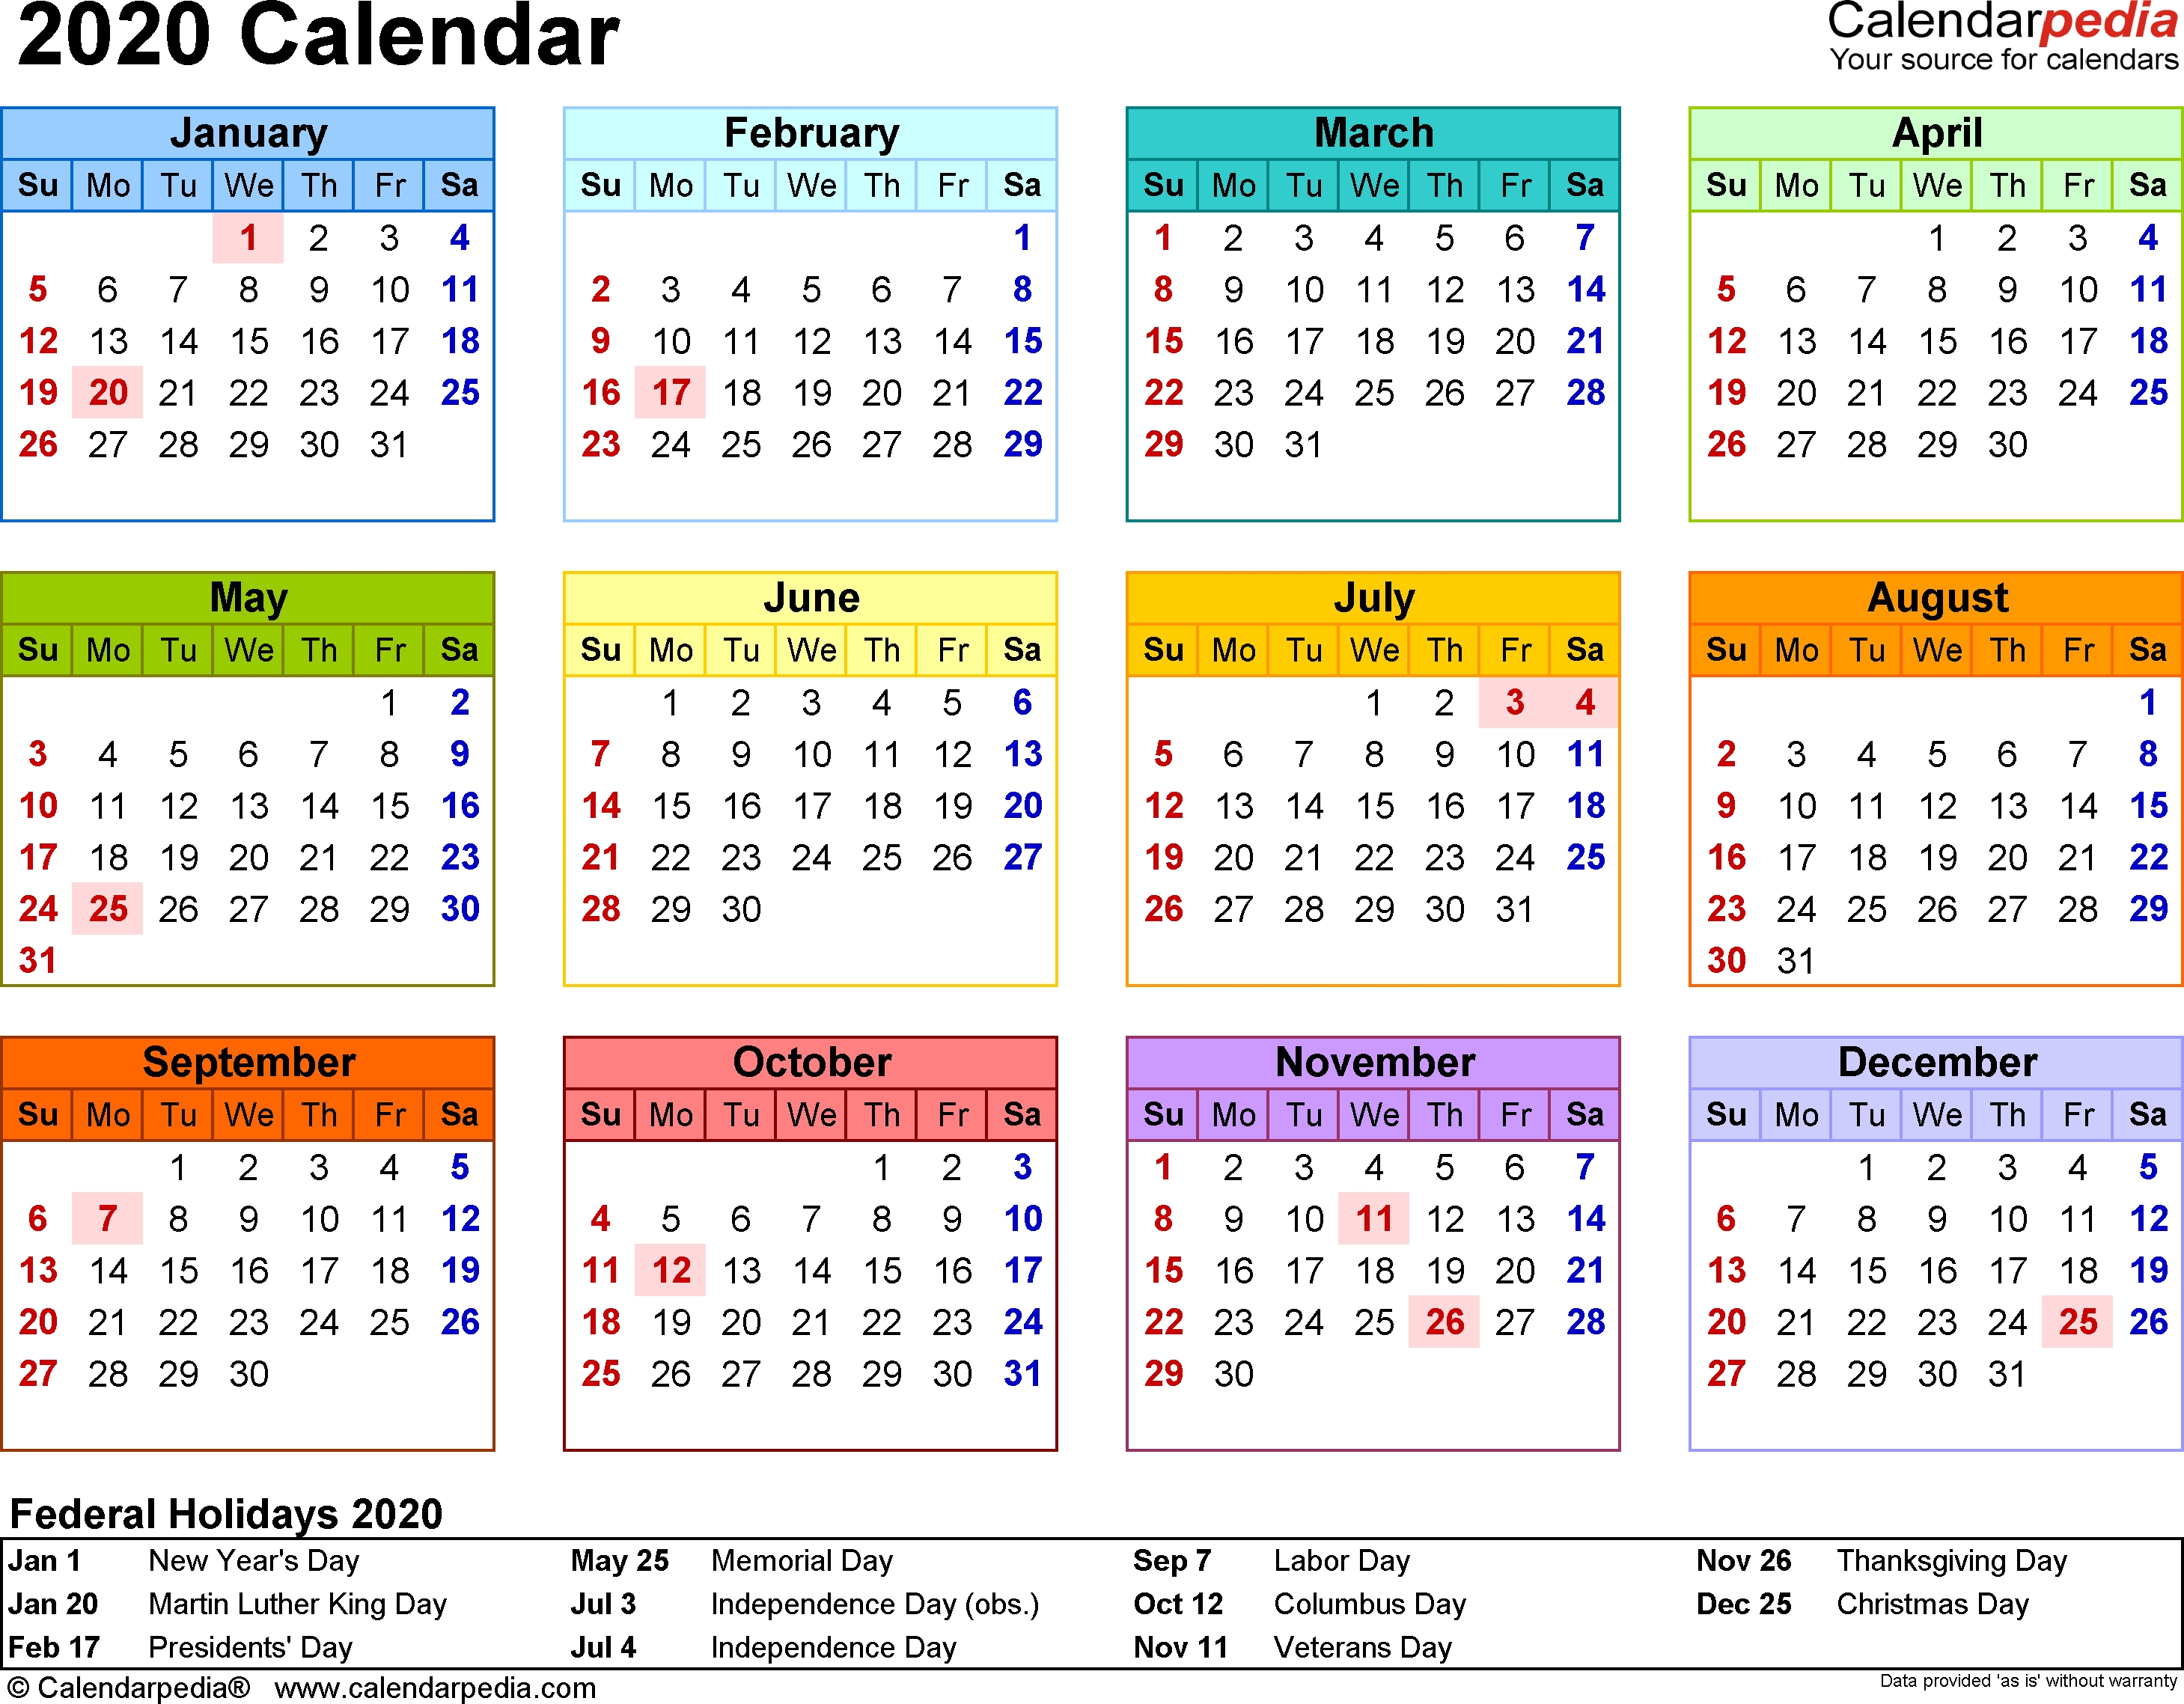 2020 Calendar - Free Printable Microsoft Word Templates Exceptional 2020 Calendar Showing Federal Holidays